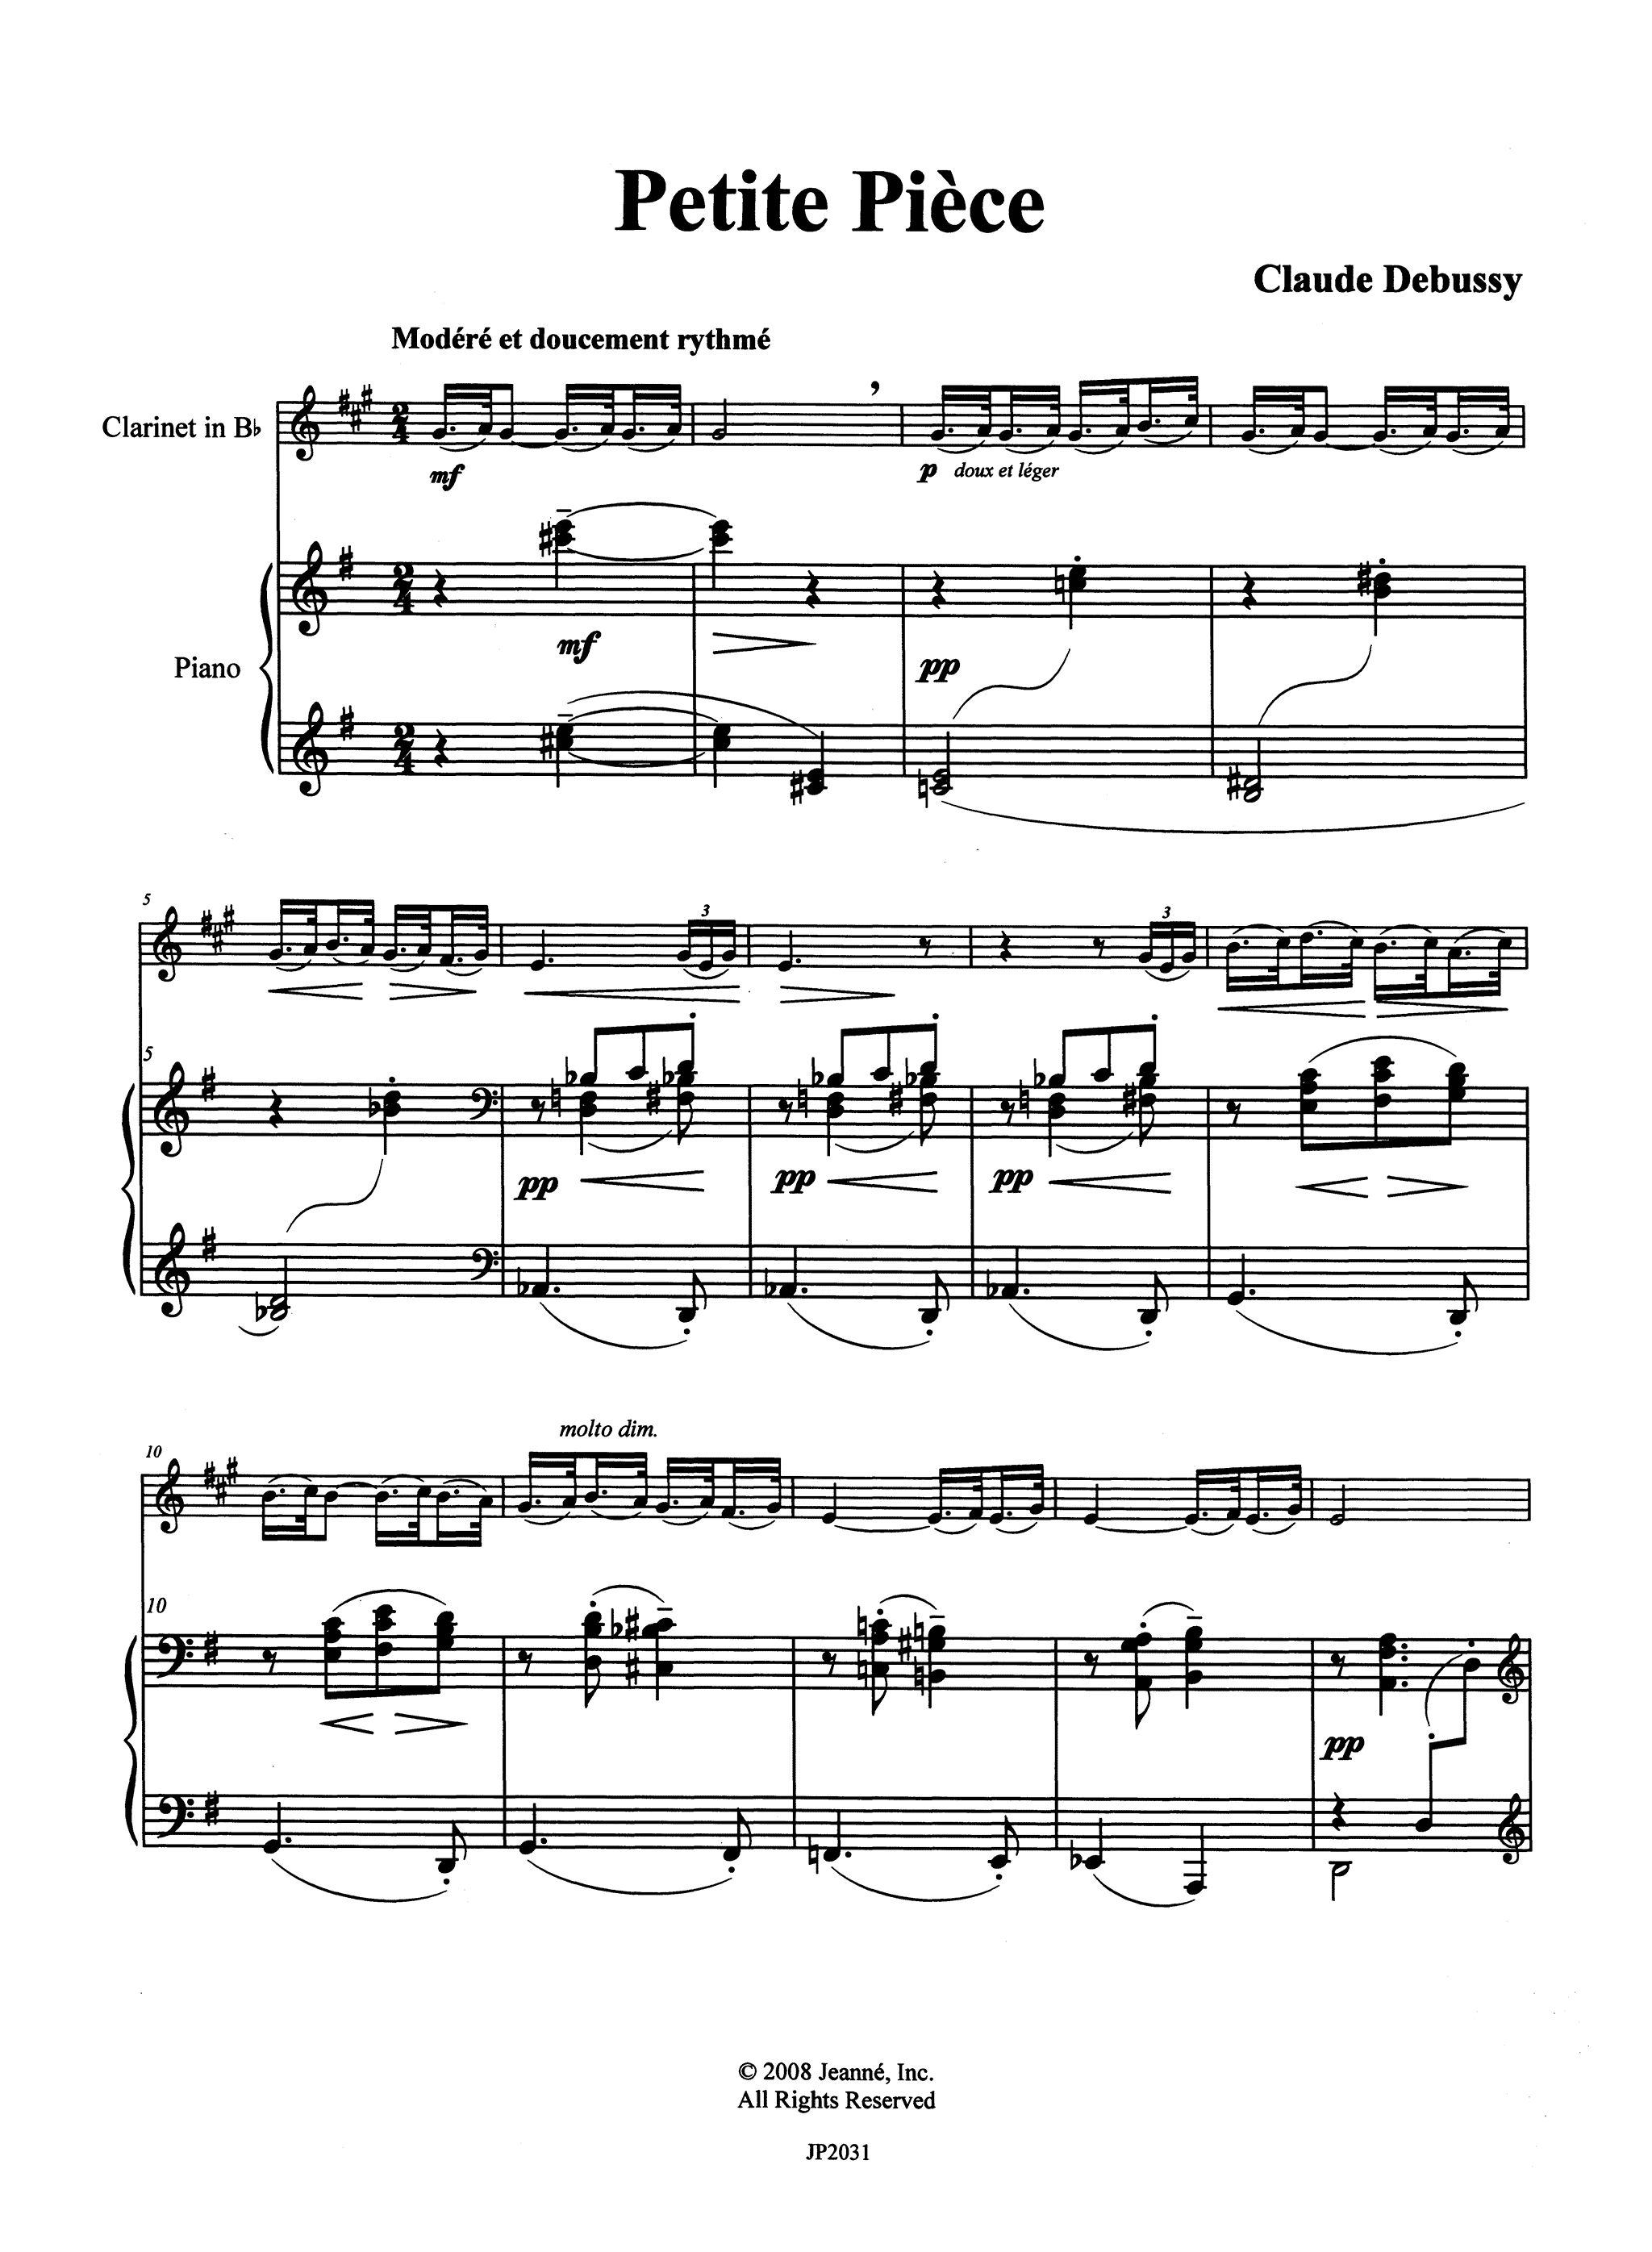 Debussy Petite pièce Score